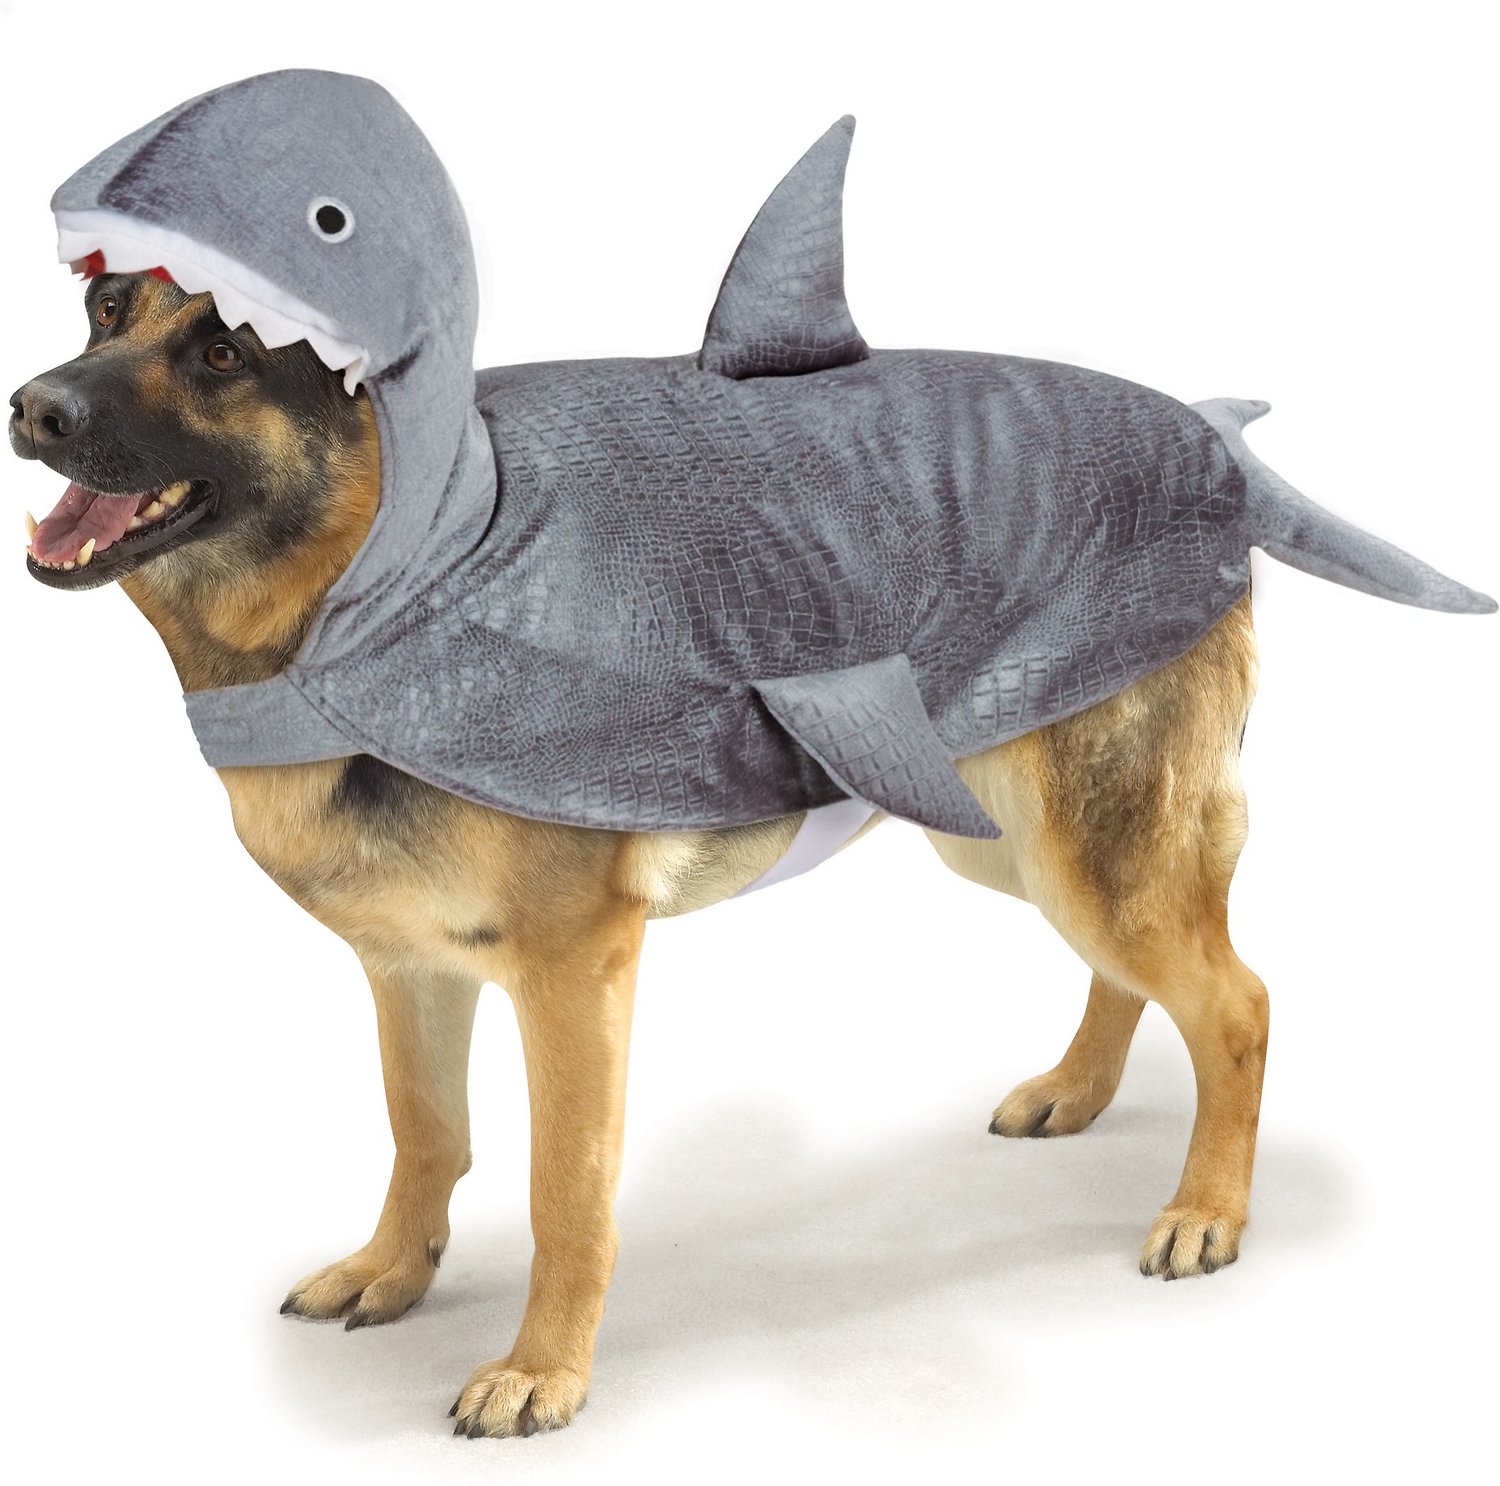 German Shepherd in shark costume